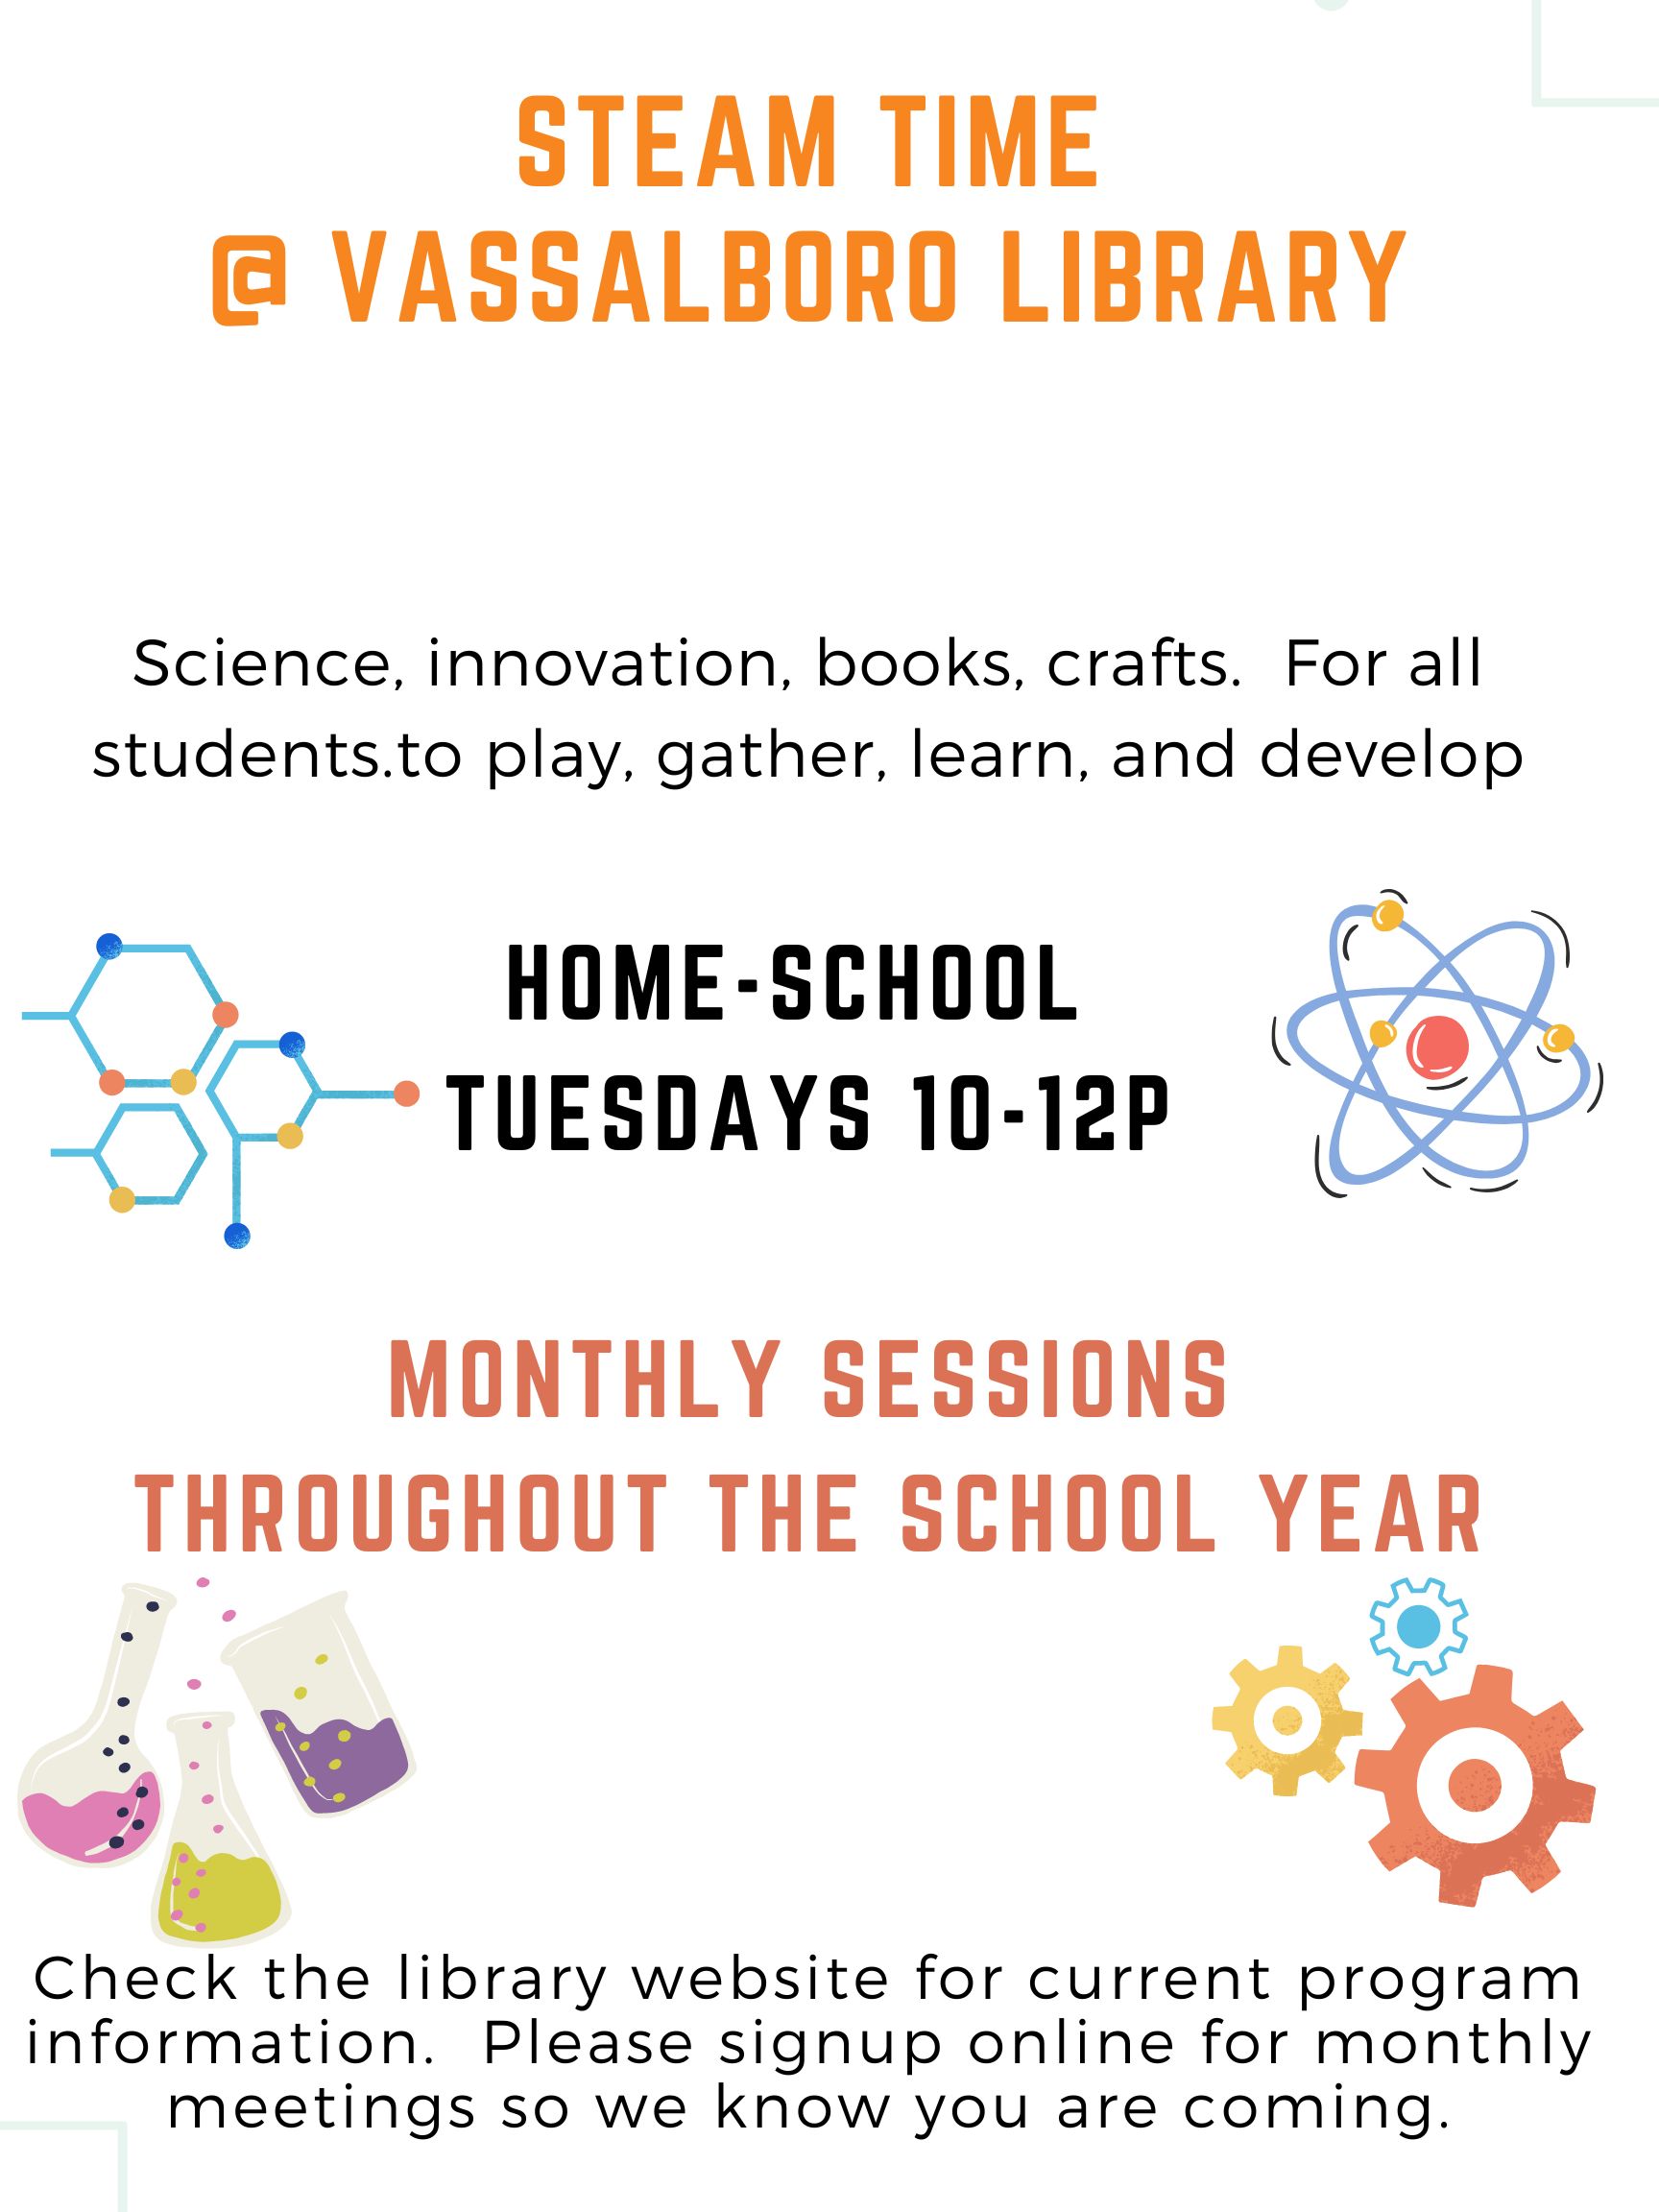 Monthly steam time at Vassalboro Library